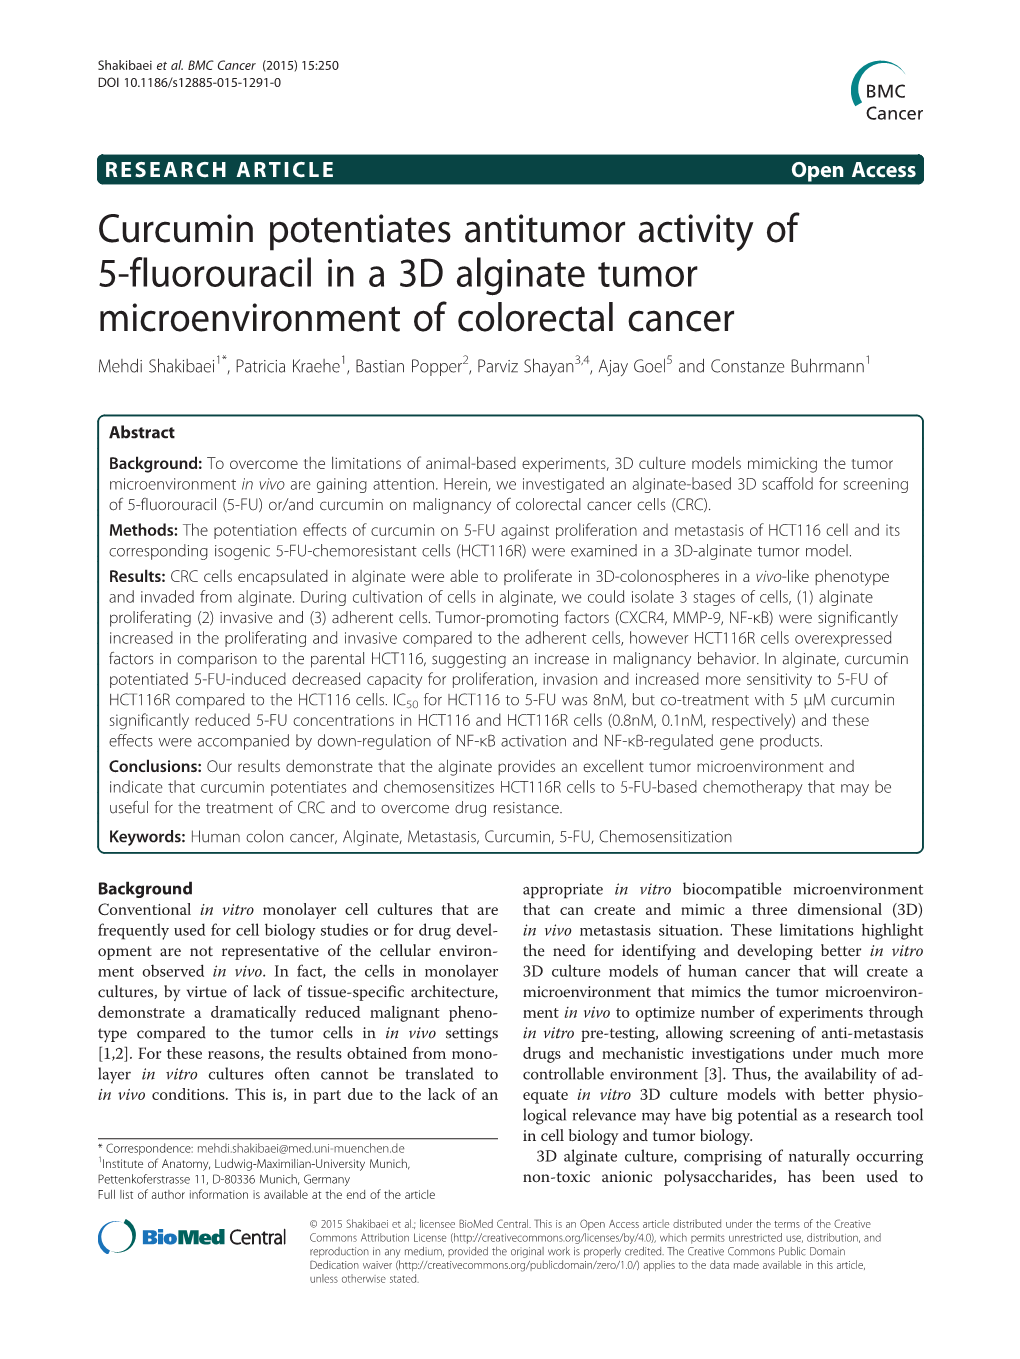 Curcumin Potentiates Antitumor Activity of 5-Fluorouracil in a 3D